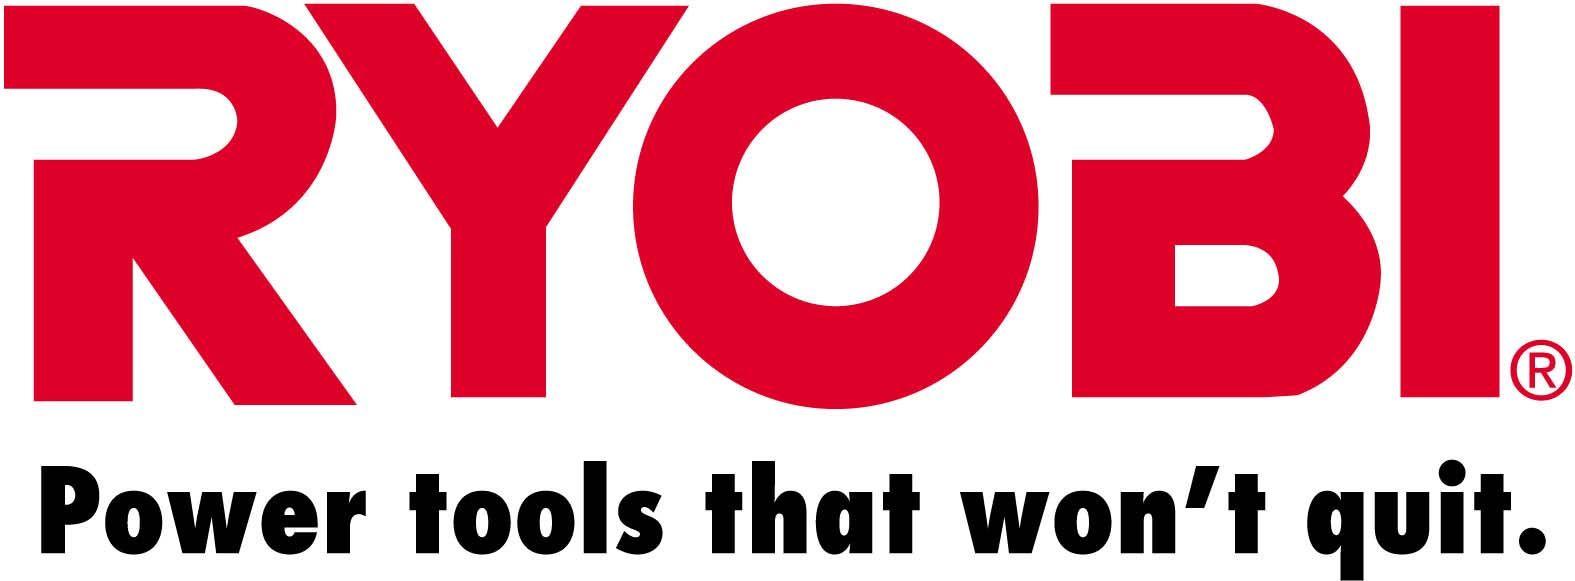 Ryobi Logo - Ryobi Logos